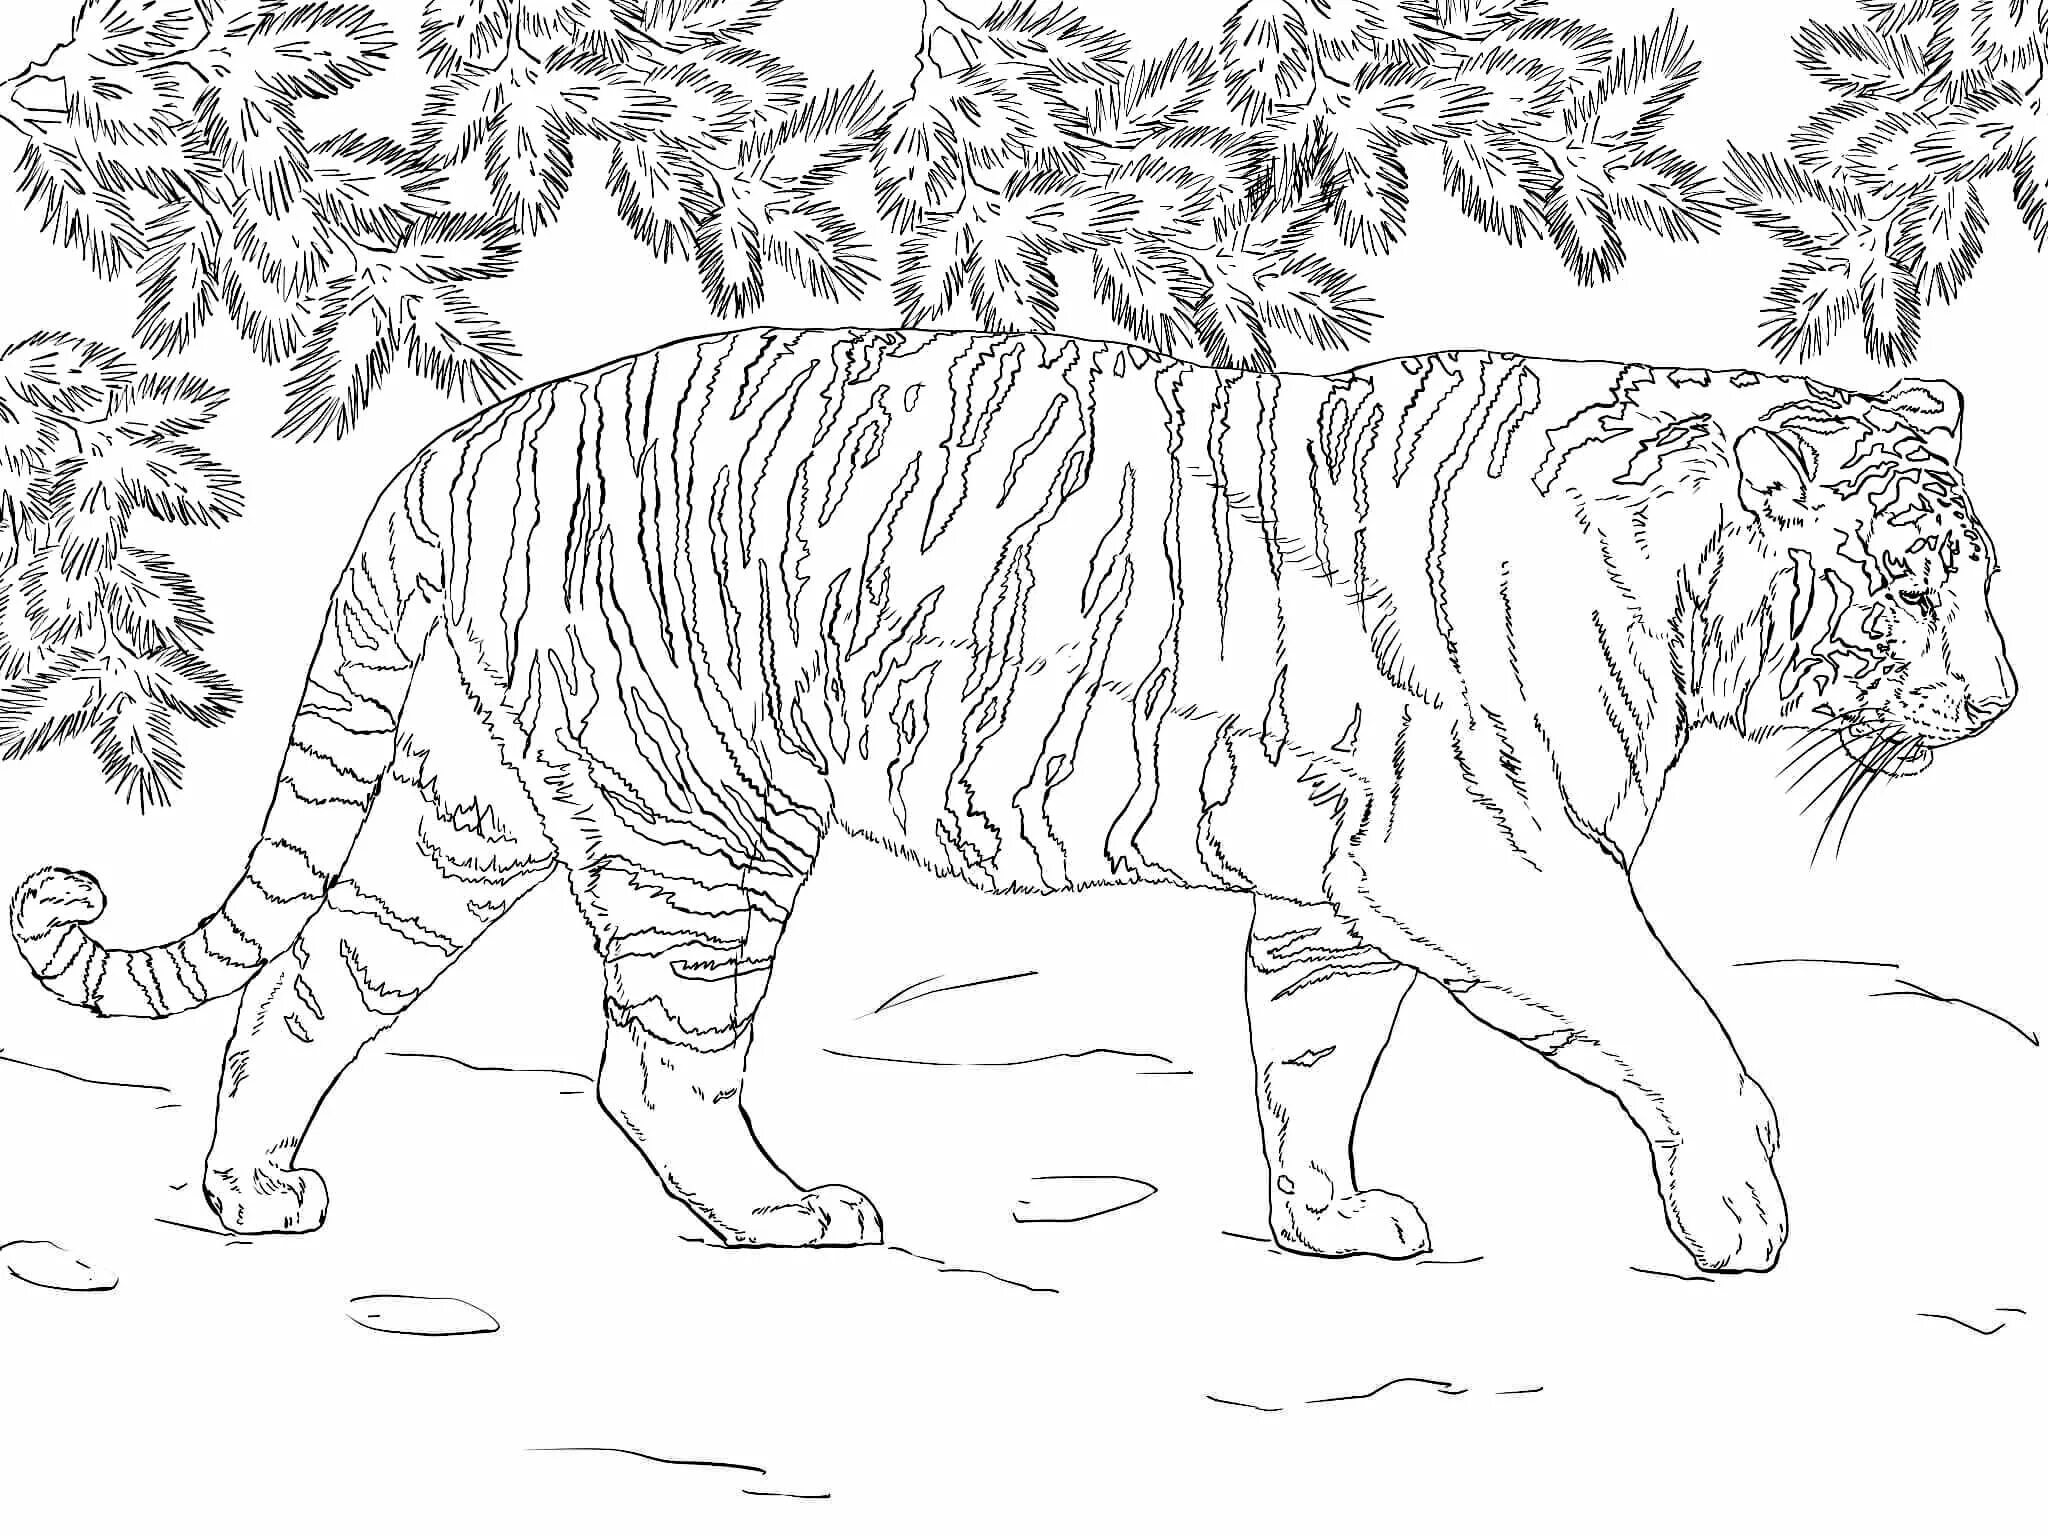 Ussuri tiger #16